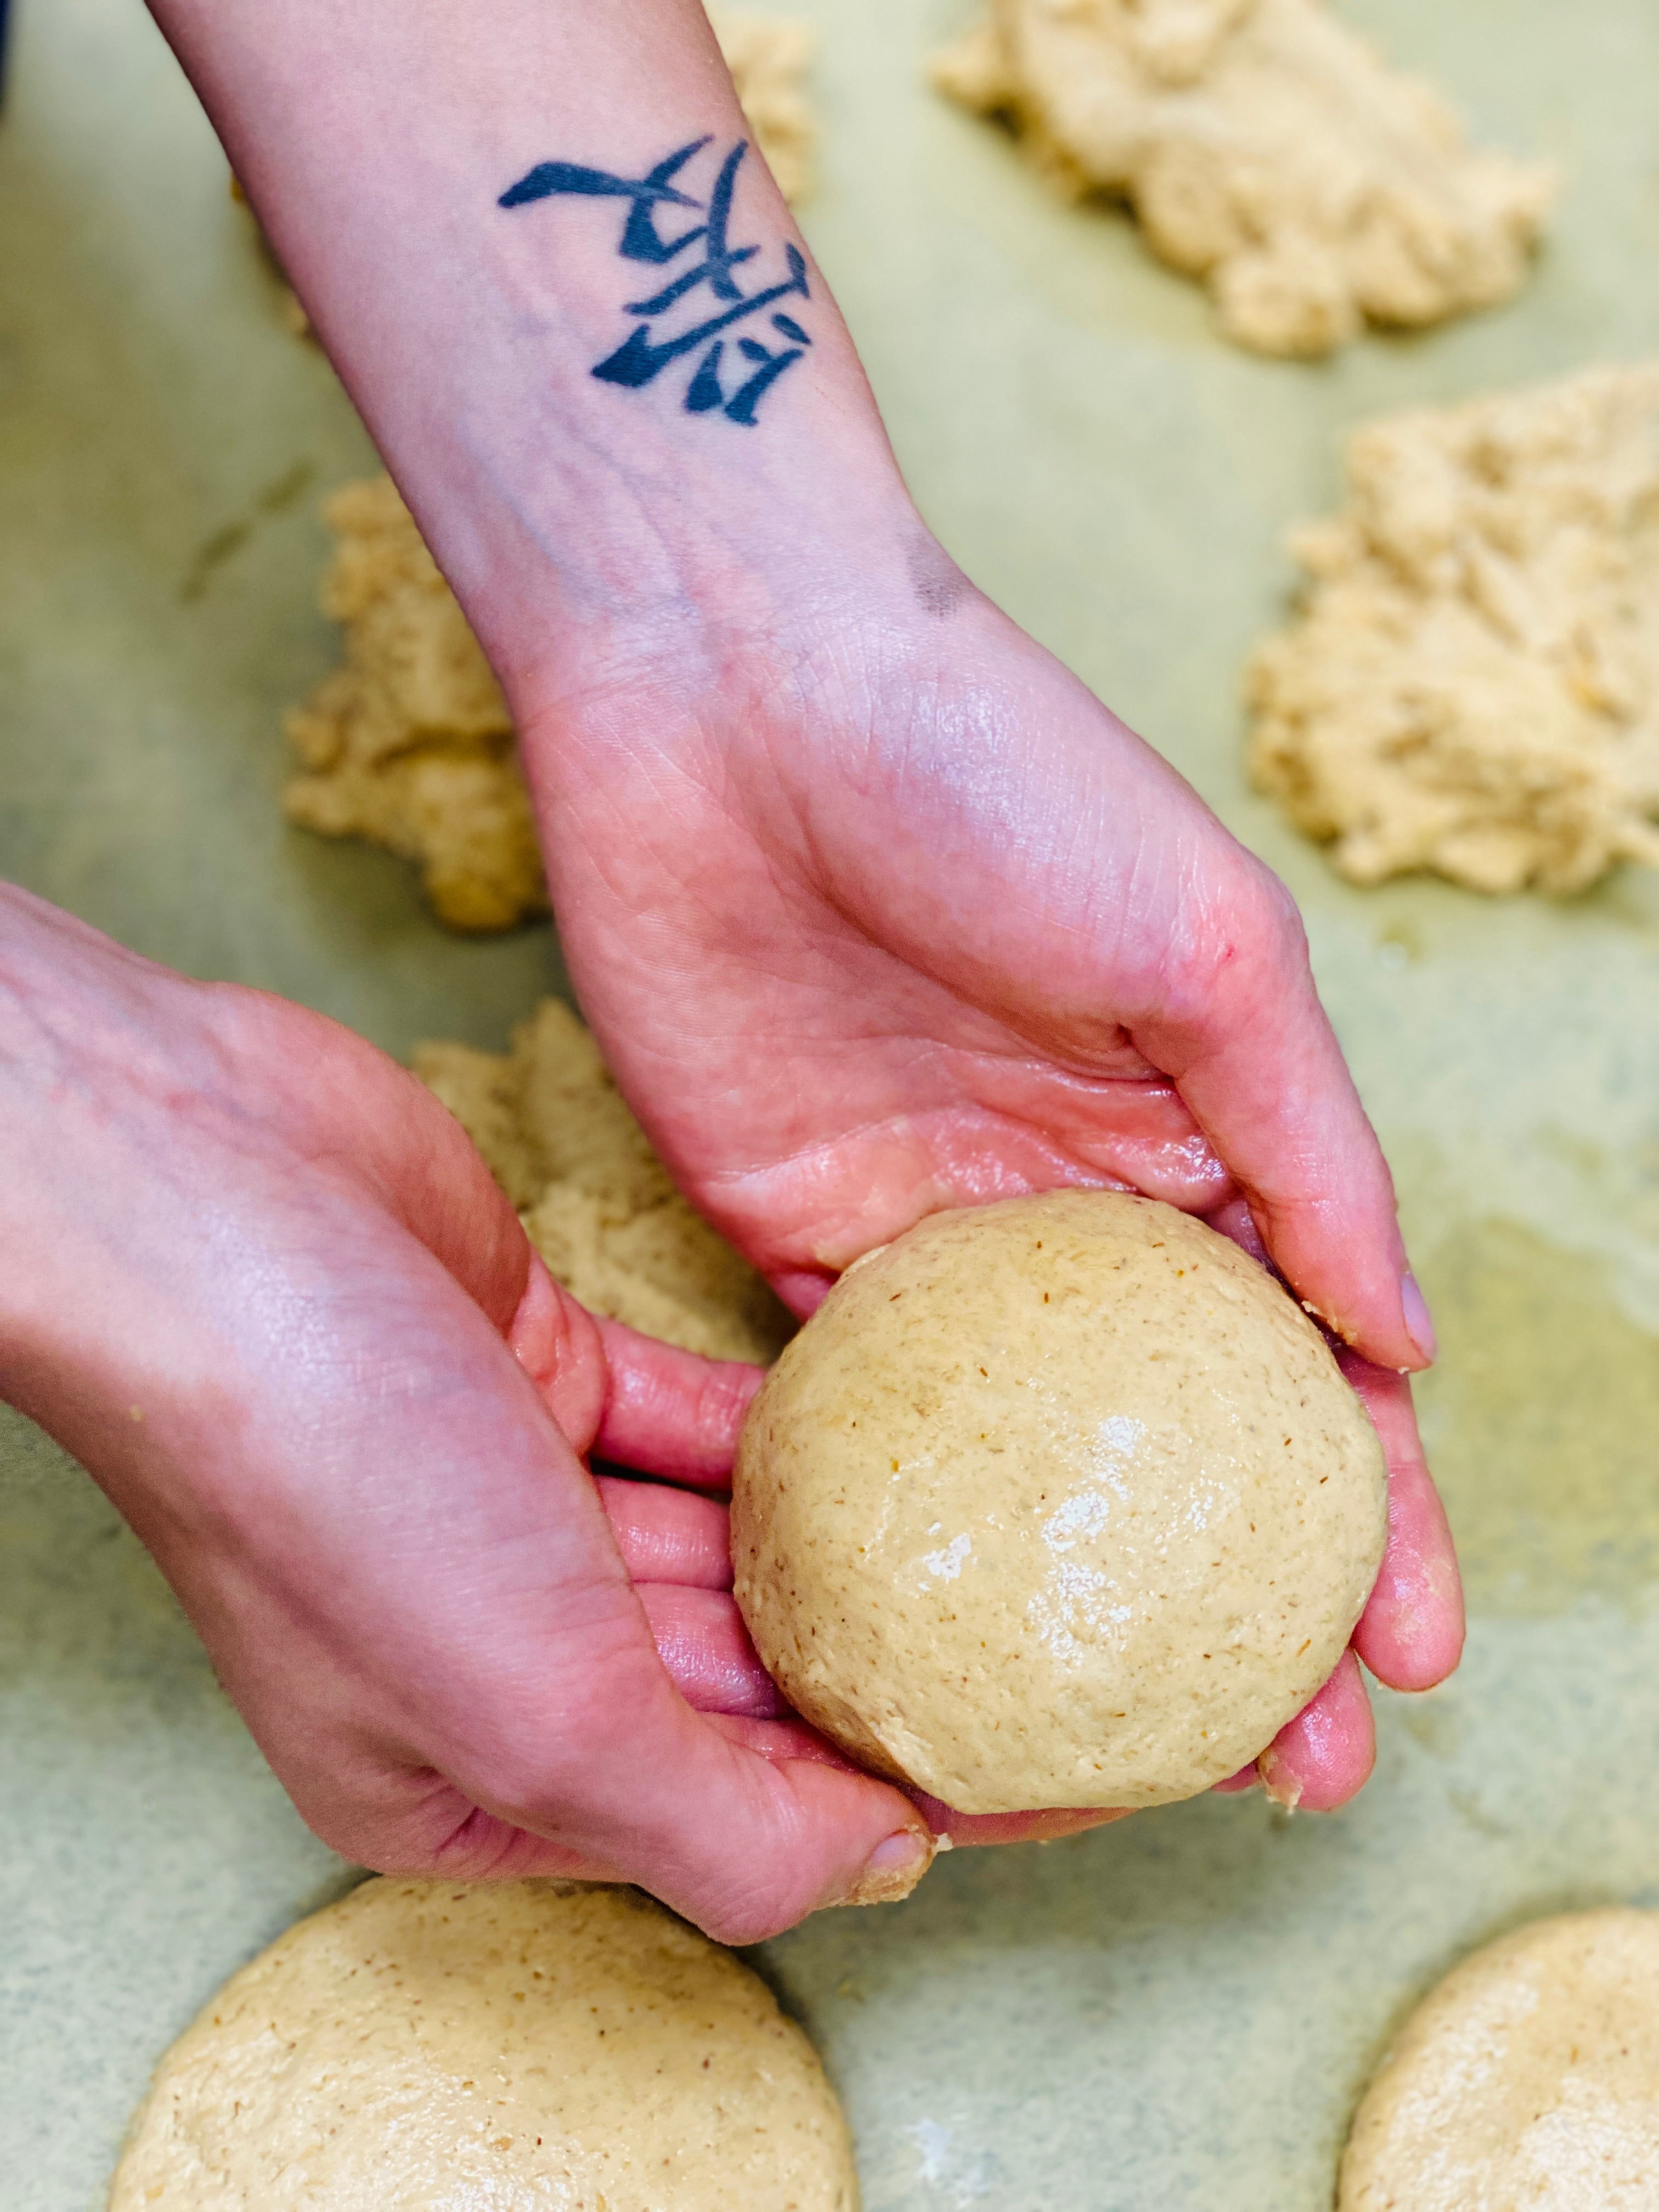 Handcrafting bread everyday fresh baked Gluten free, Vegan and Kosher certified